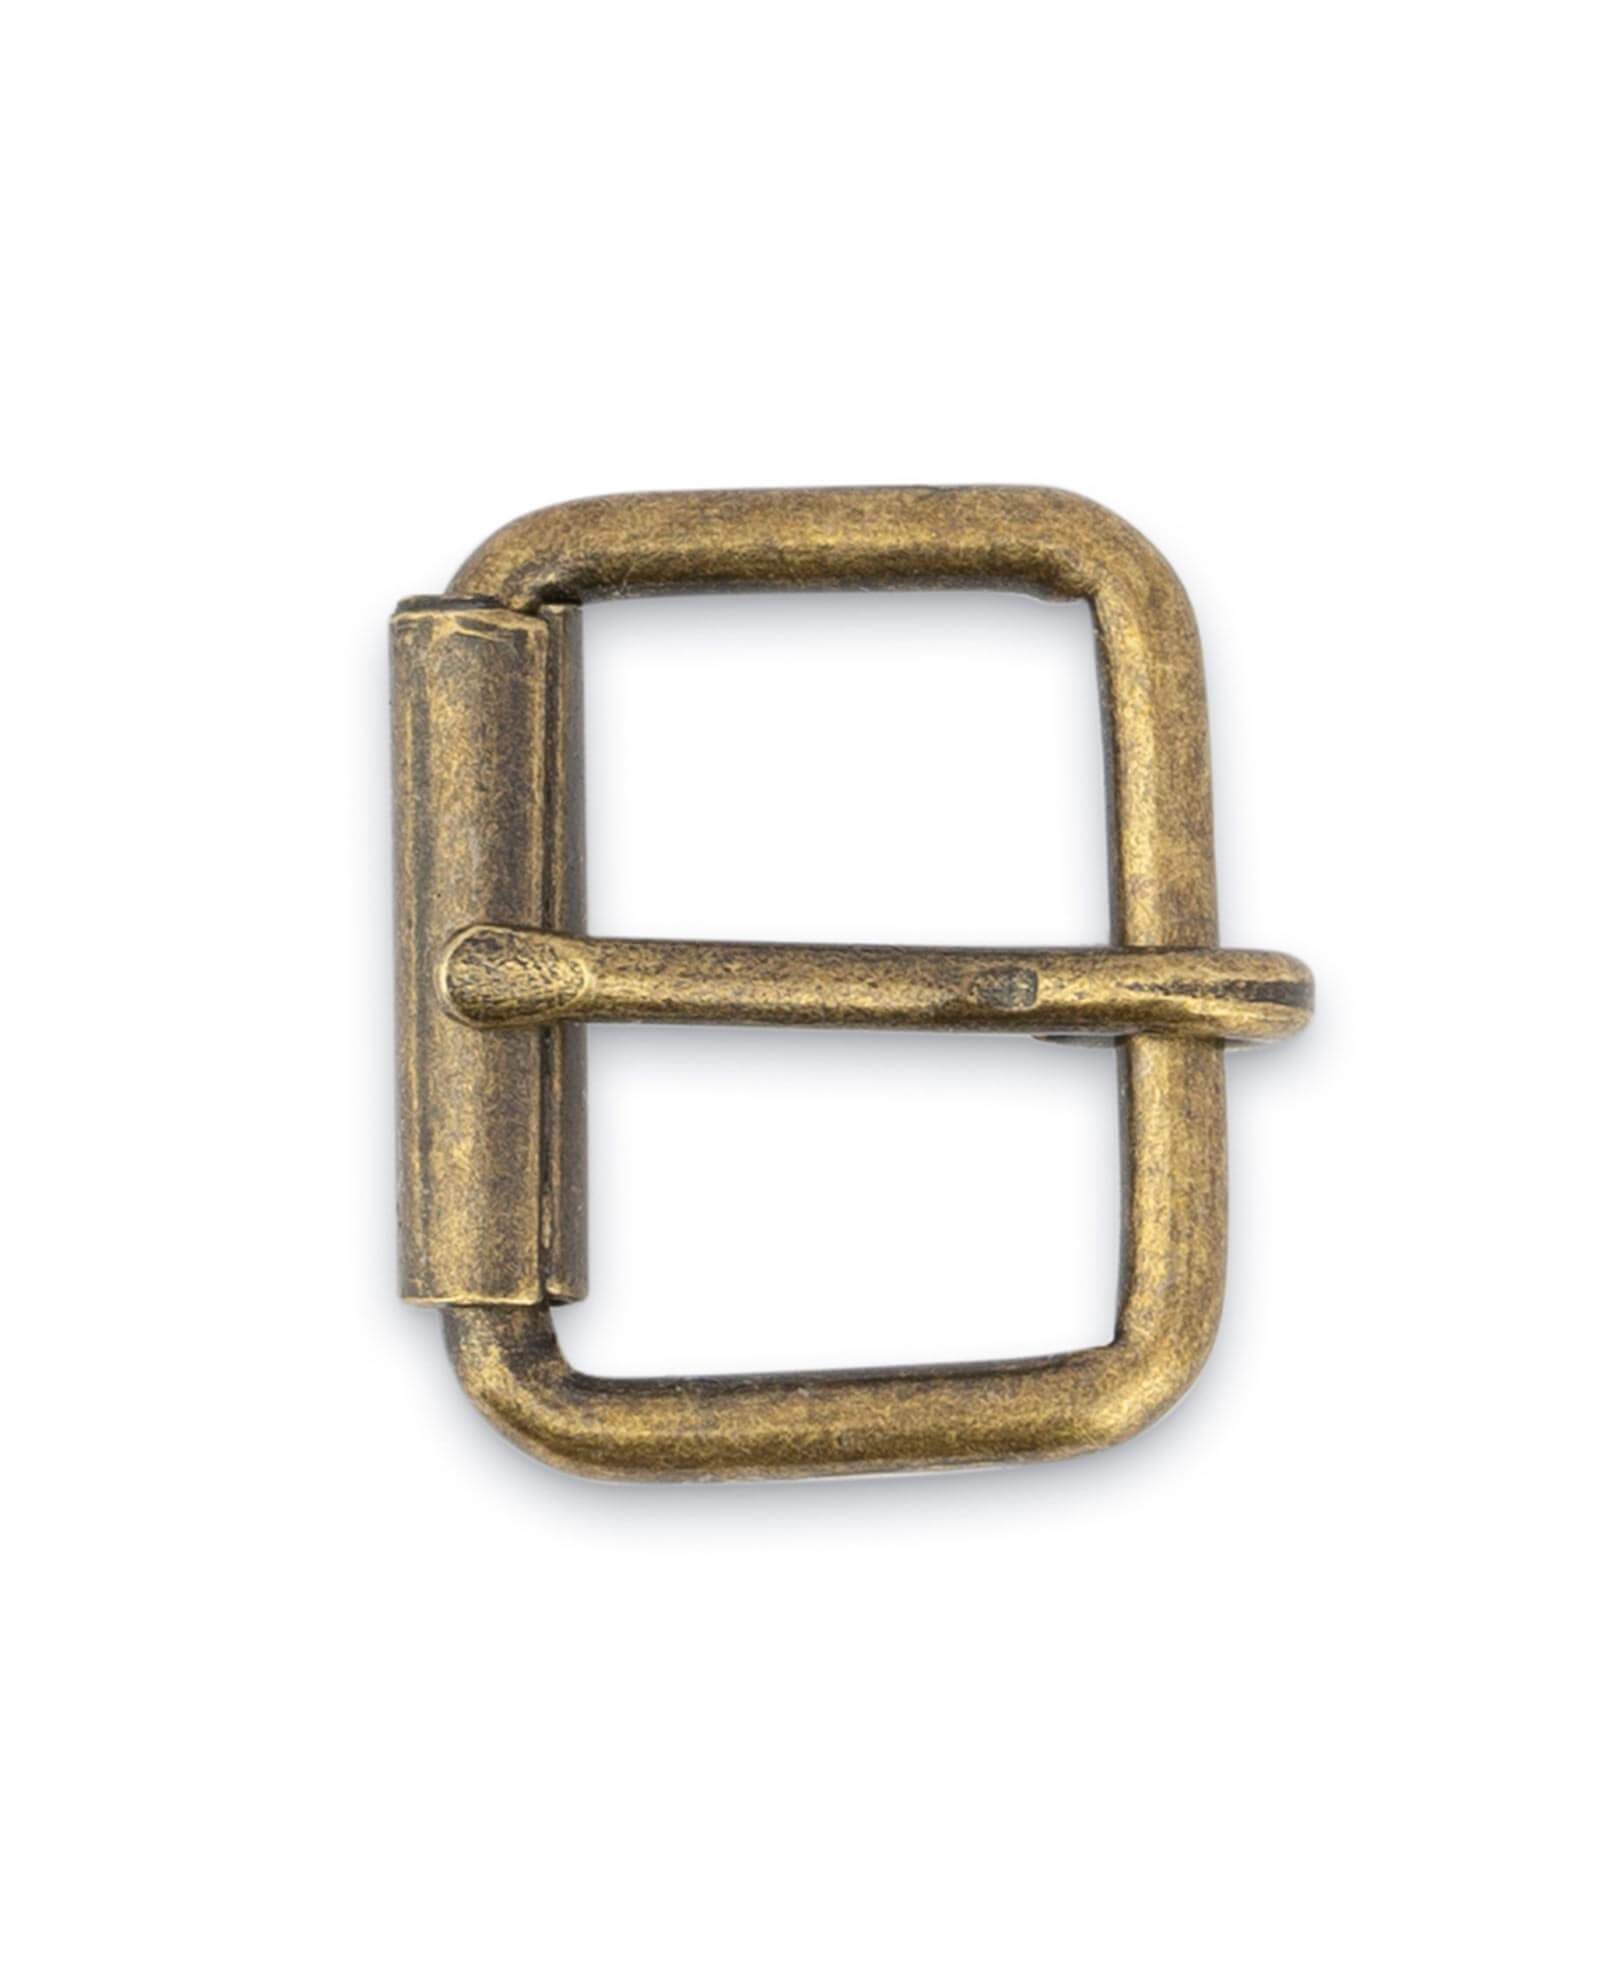 https://leatherbeltsonline.com/wp-content/uploads/2020/10/Antique-Brass-Roller-Belt-Buckle-20-Mm-3.jpg